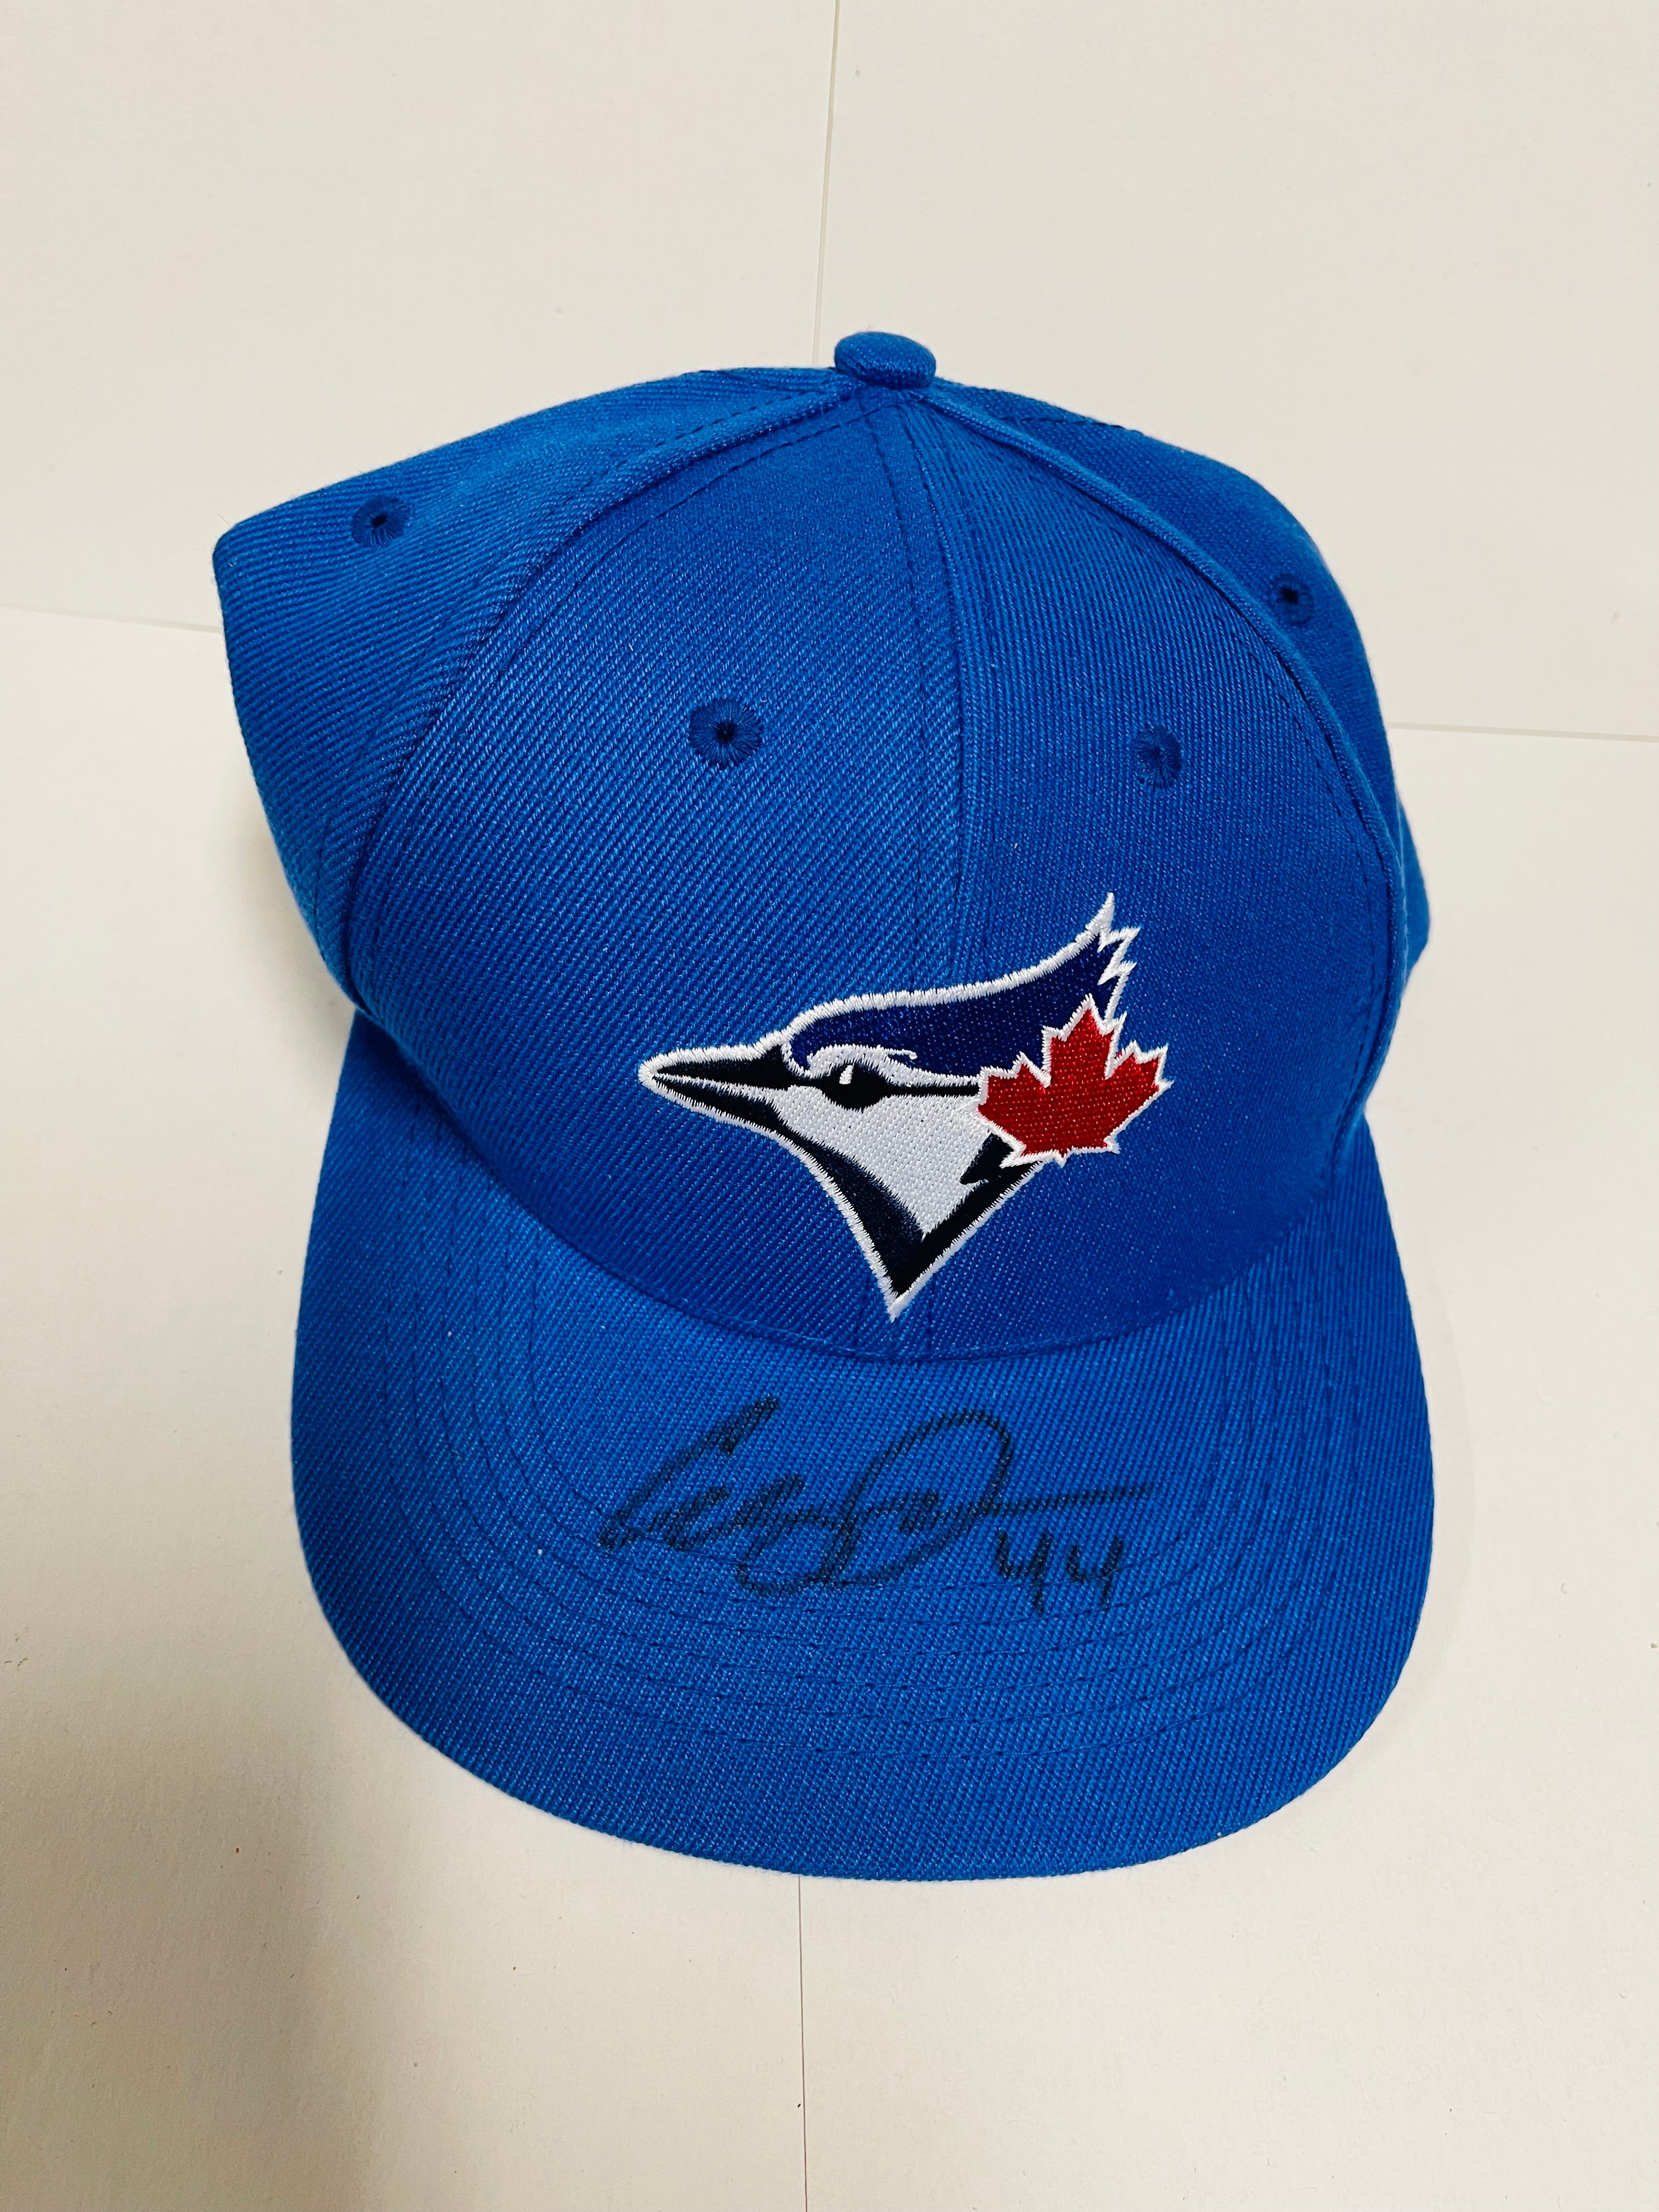 Toronto Blue Jays baseball Casey Janssen autograph baseball hat with COA